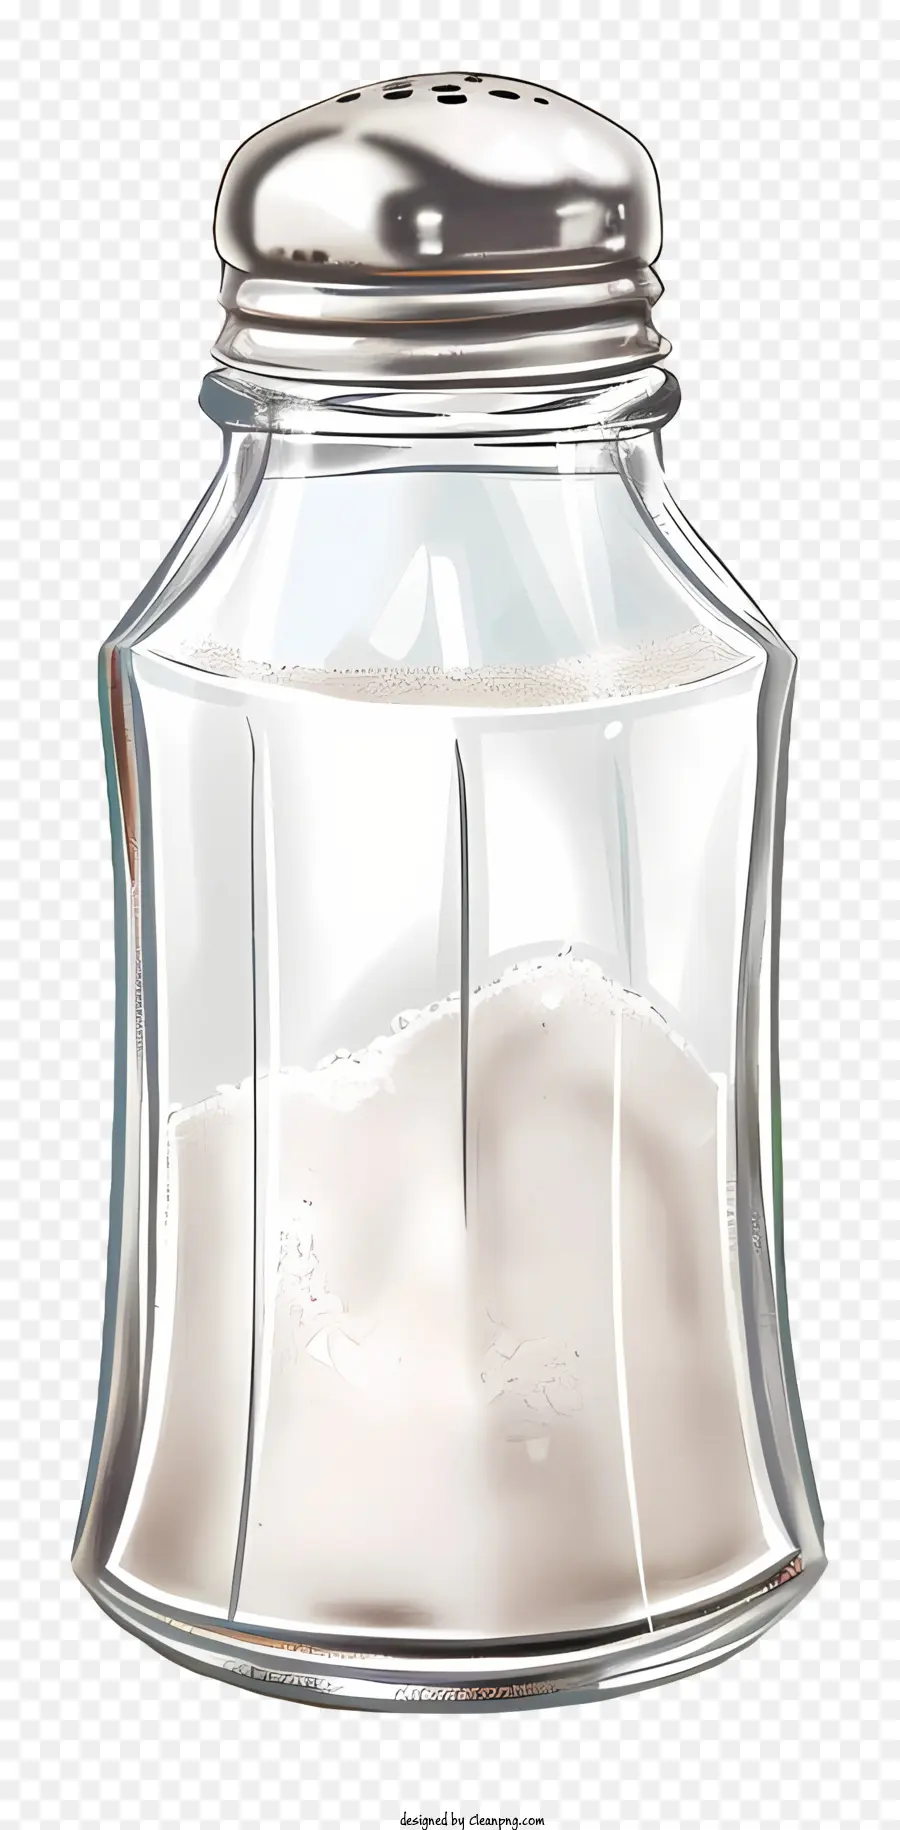 salt shaker shaker in vetro inossidabile in acciaio inossidabile utensili da cucina - Shaker di sale in vetro trasparente con acciaio inossidabile